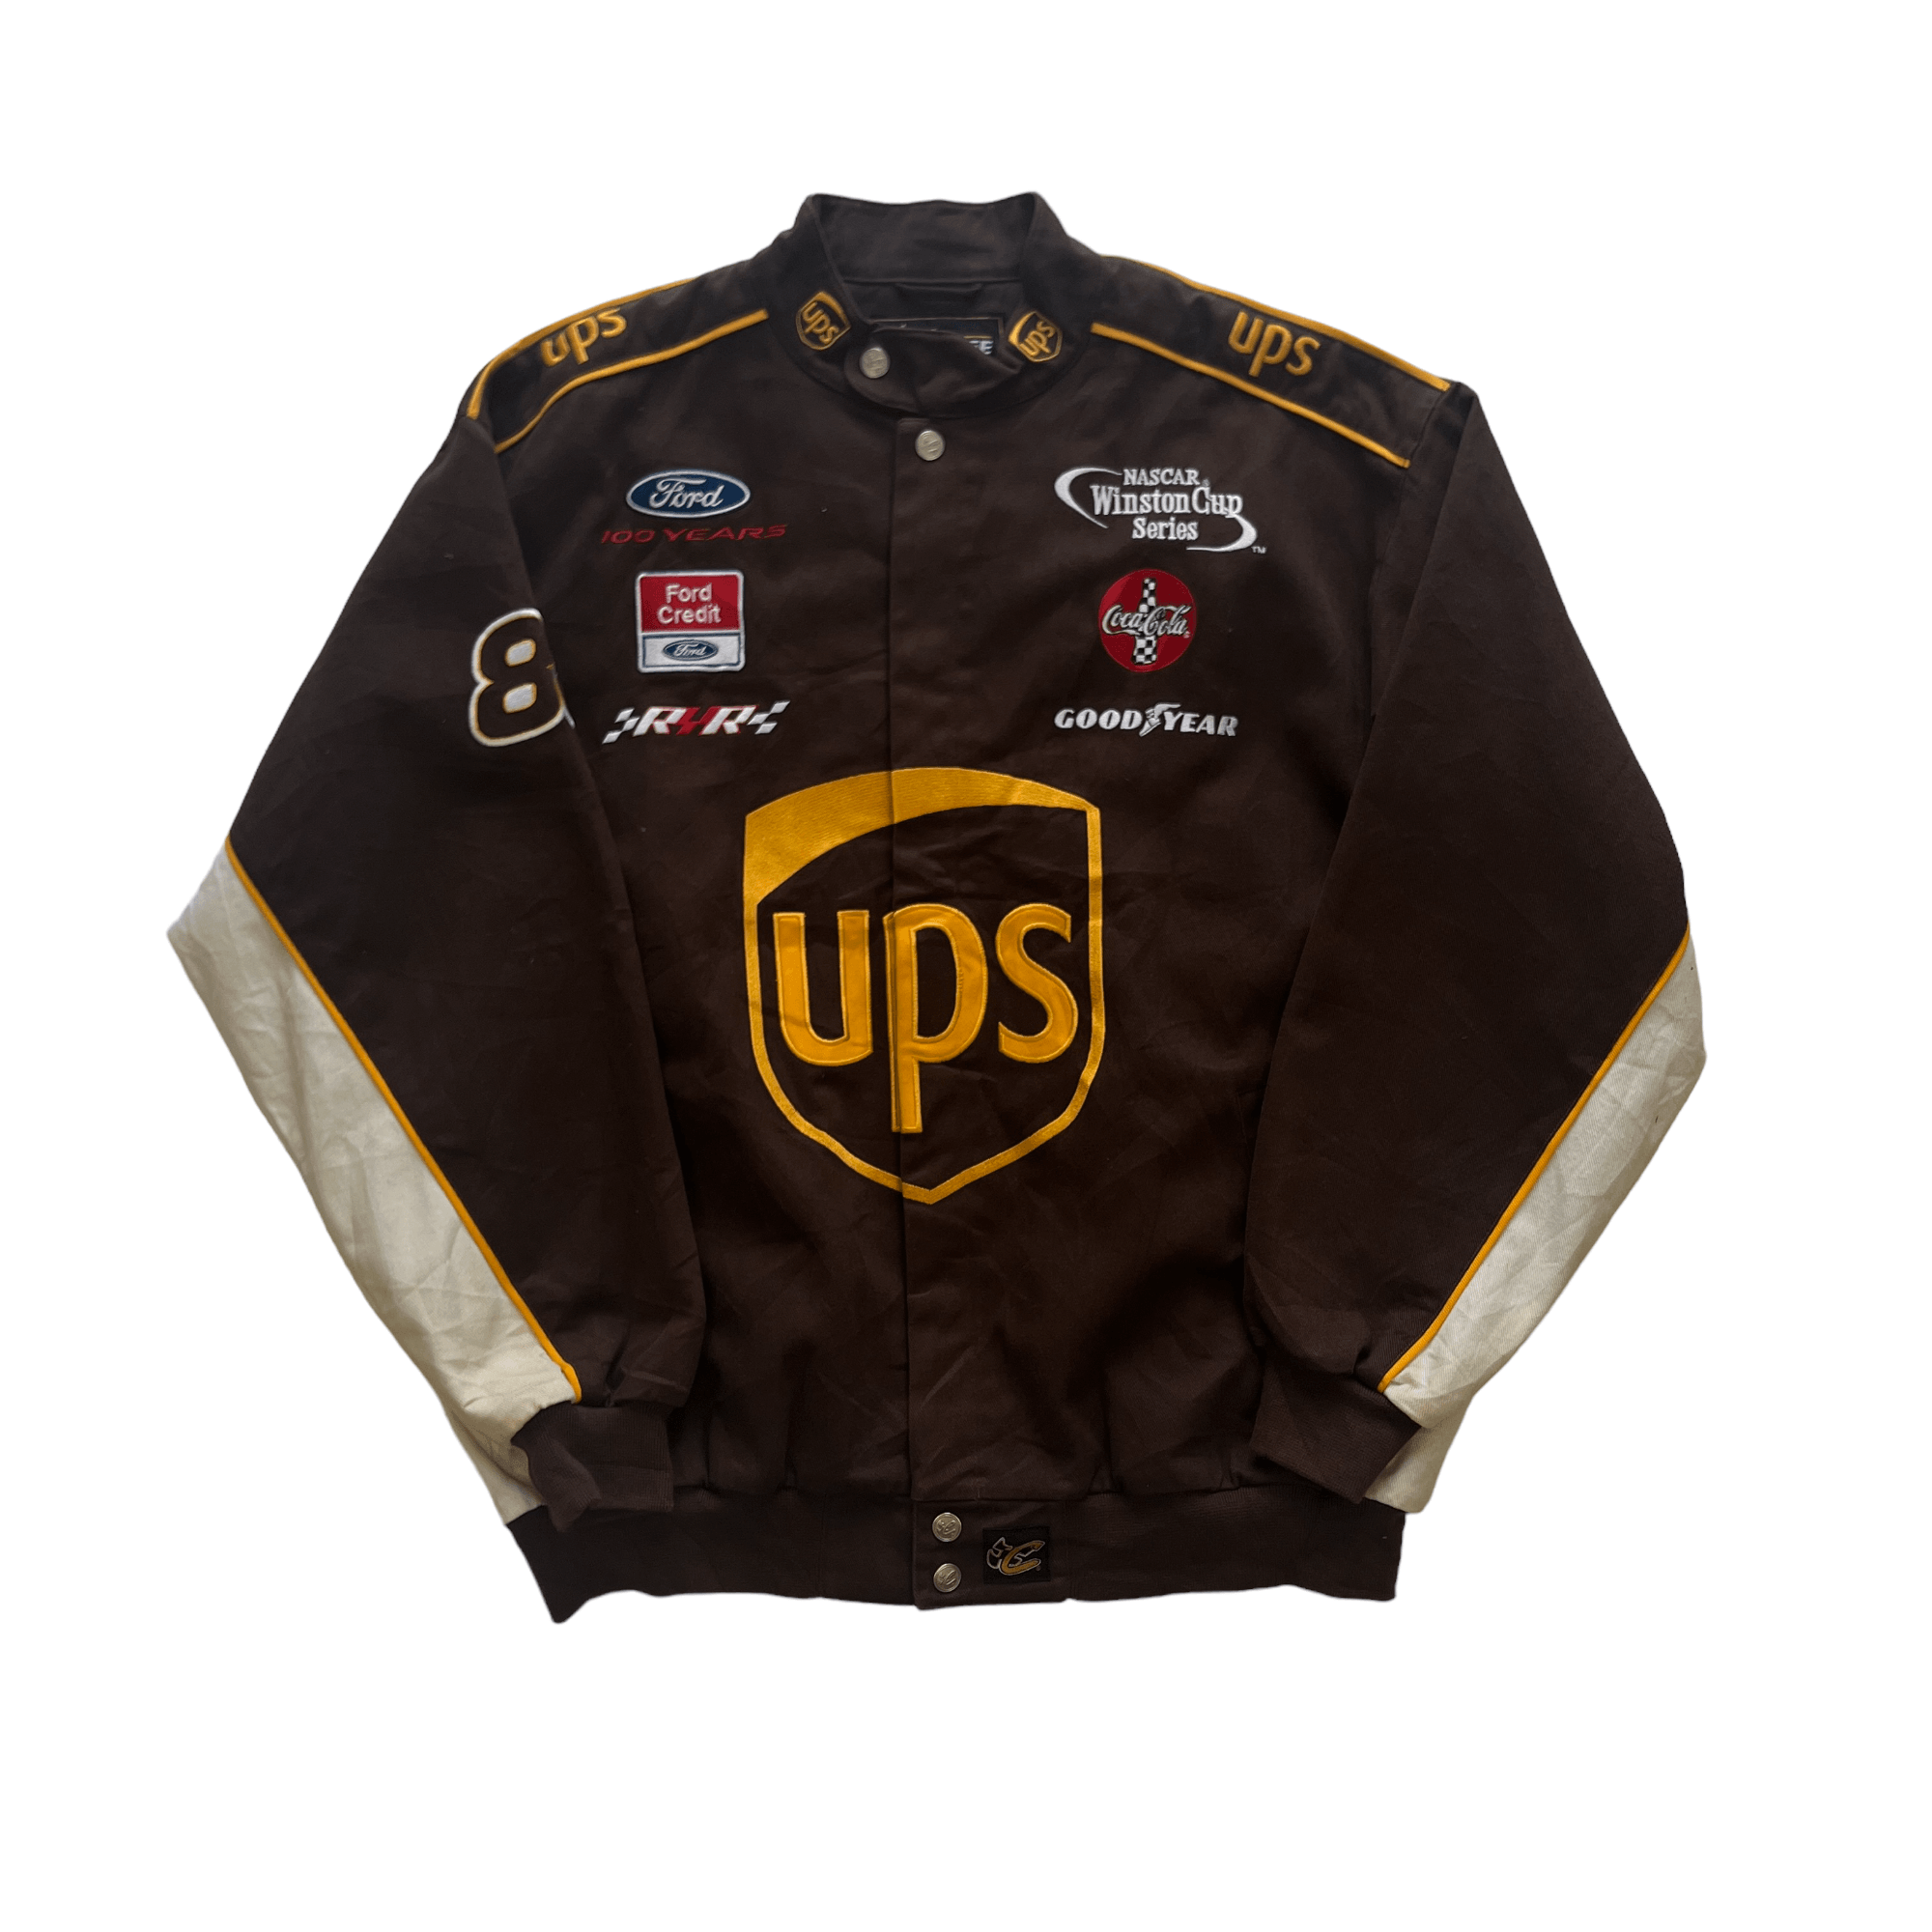 Vintage 90s Brown NASCAR UPS Racing Jacket - Extra Large - The Streetwear Studio